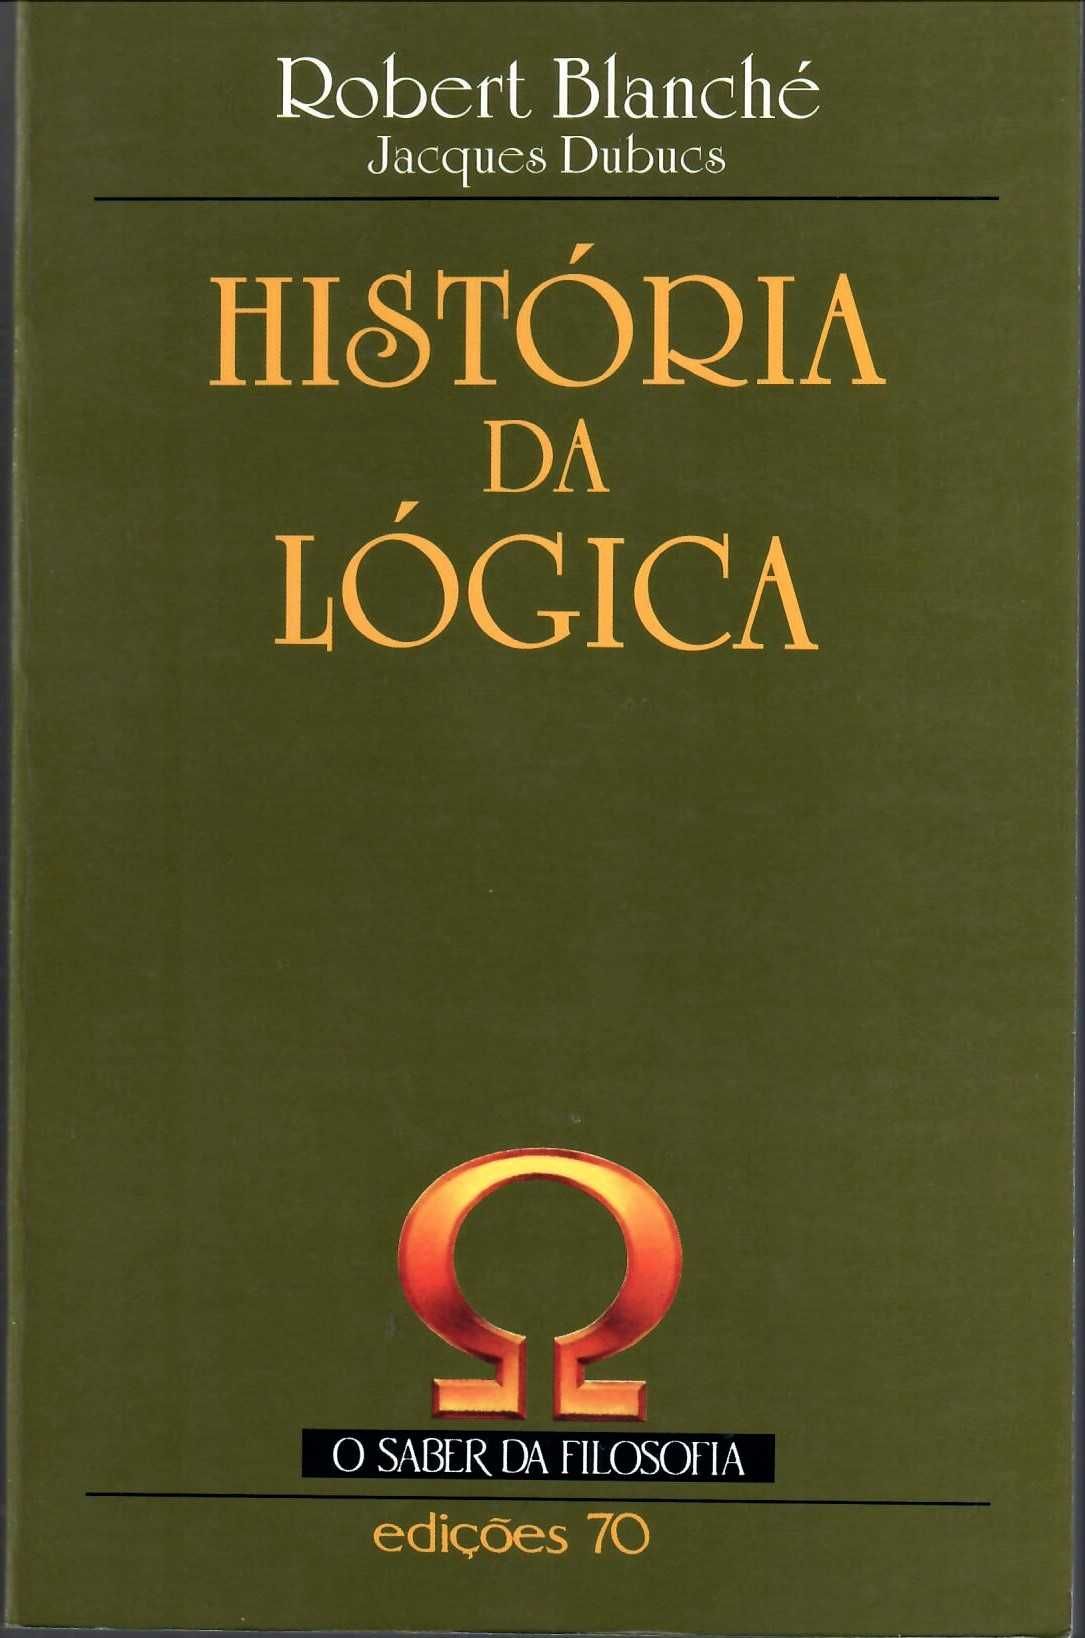 Robert Blanché e Jacques Dubucs «História da Lógica»